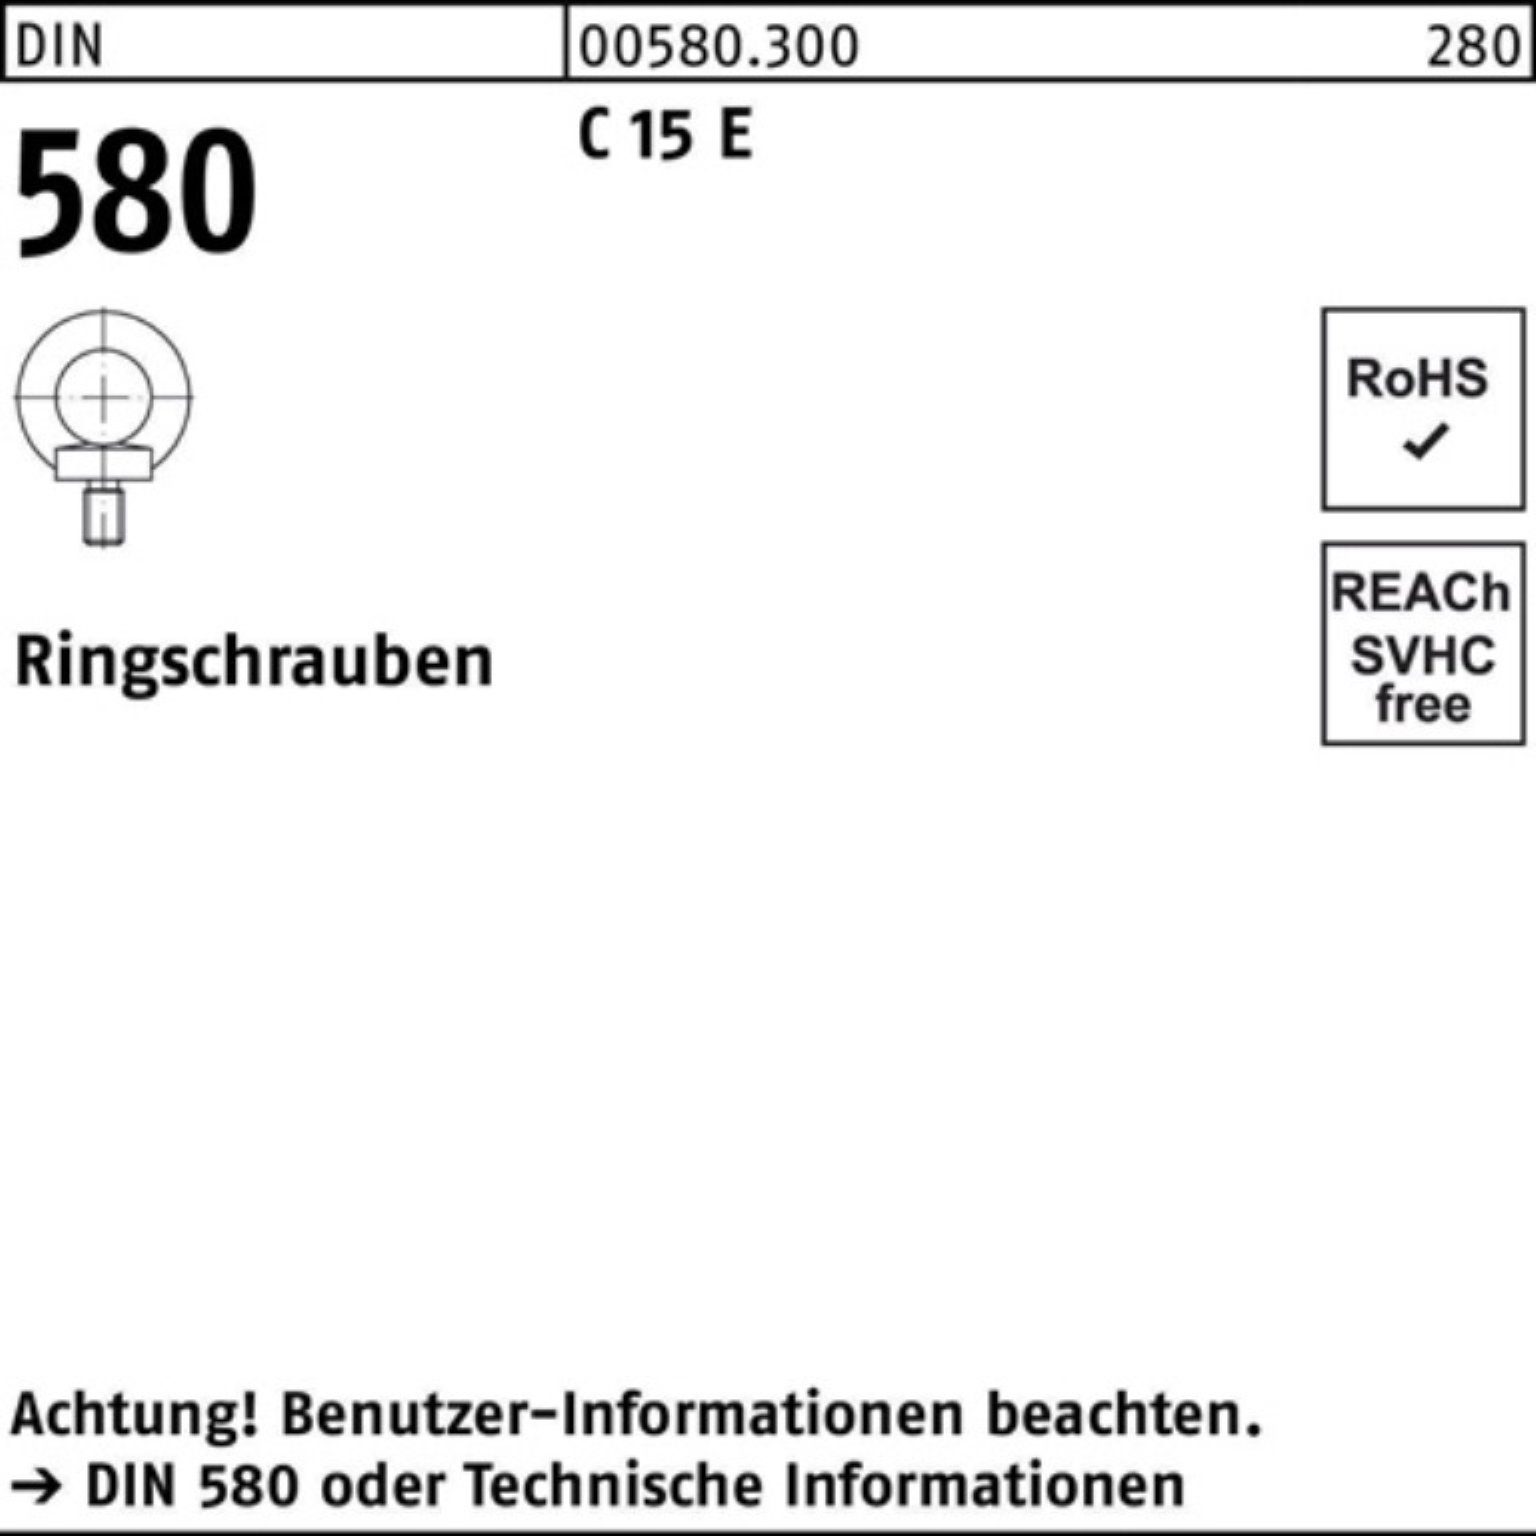 Reyher Schraube 100er Pack Ringschraube DIN 580 M14 C 15 E 10 Stück DIN 580 C 15 E Ri